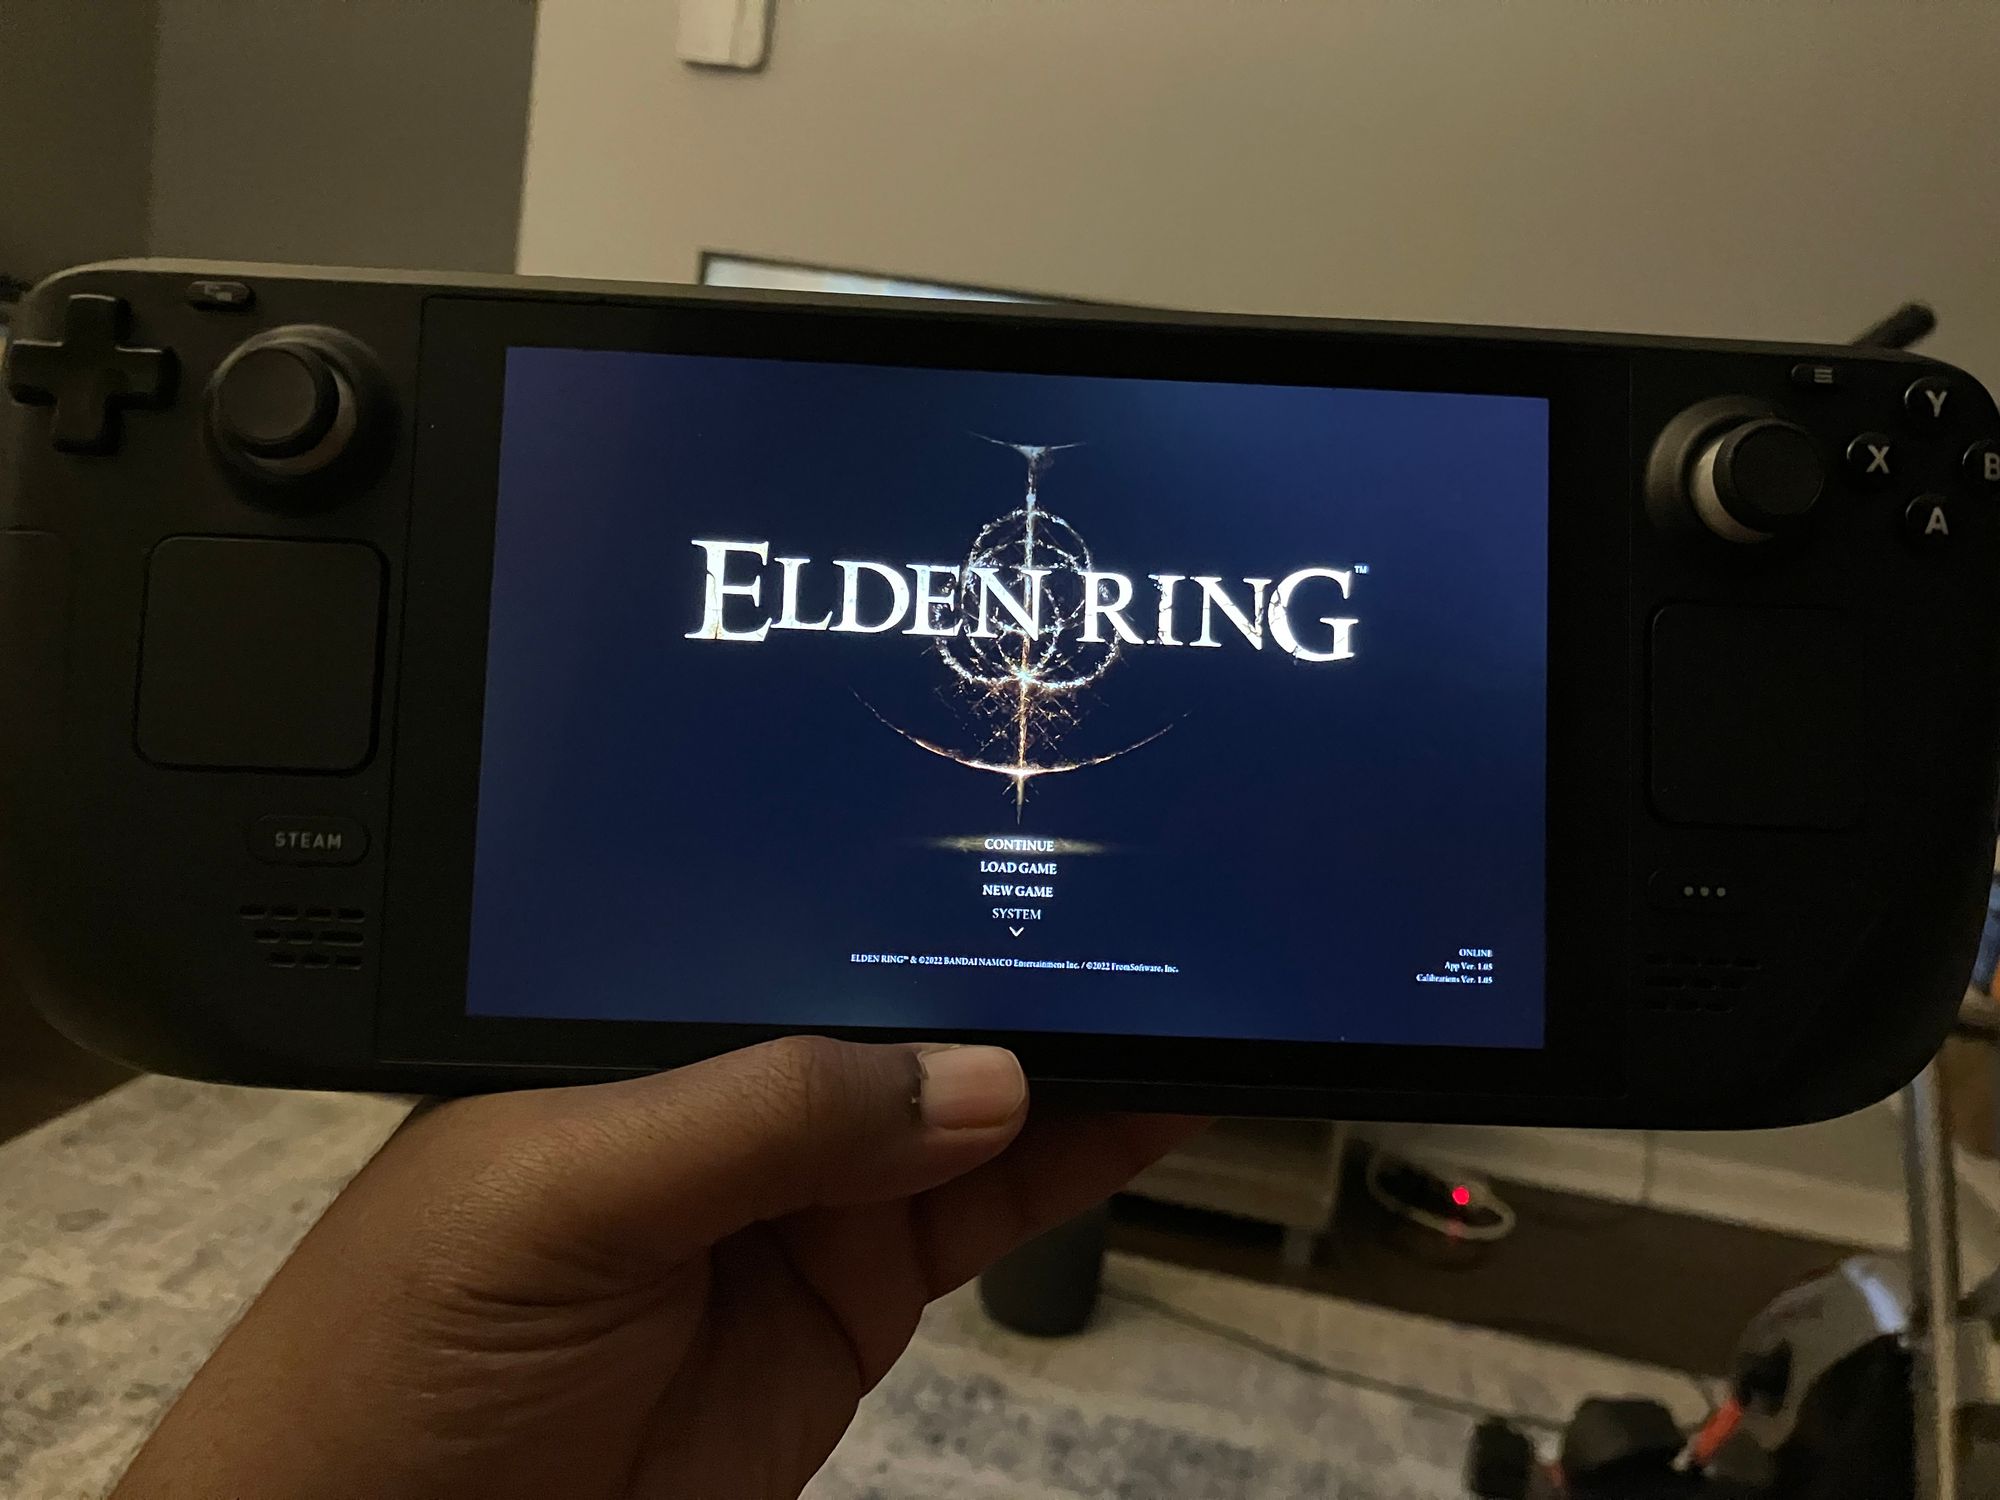 Elden Ring's main menu running on the Steam Deck